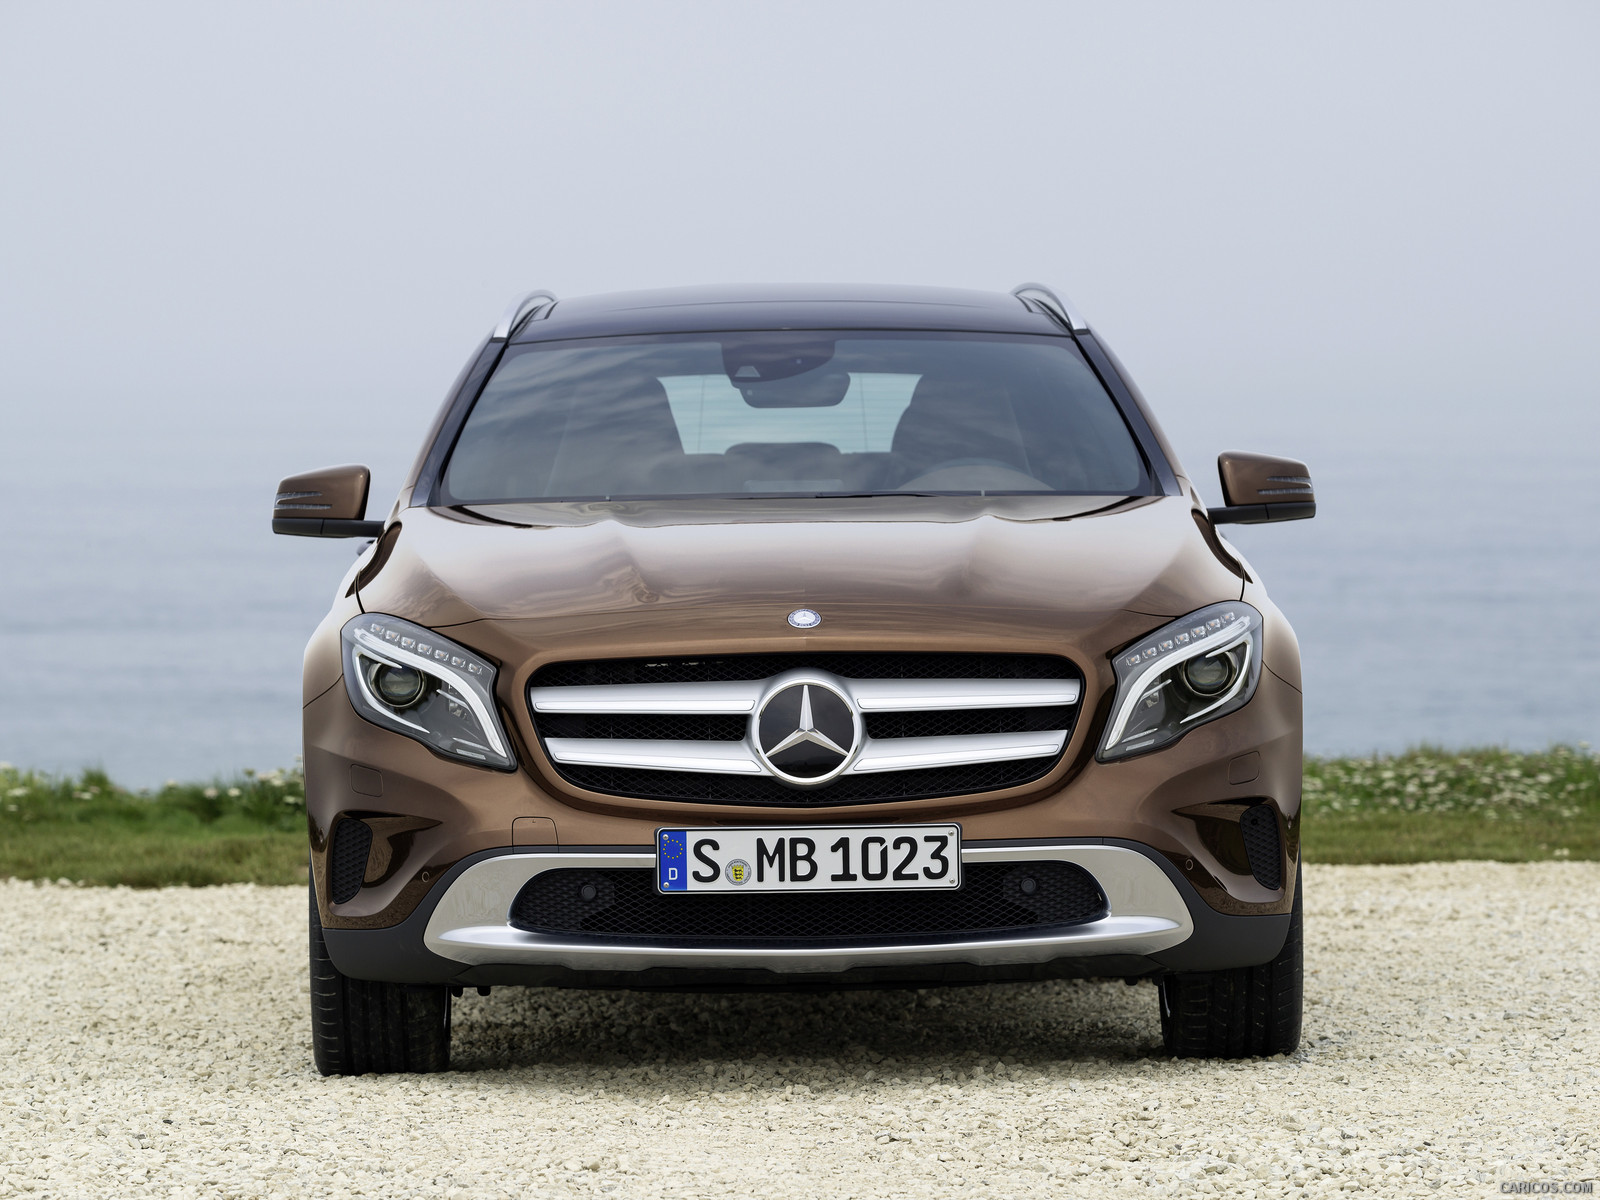 2015 Mercedes-Benz GLA-Class - GLA 220 CDI 4MATIC - Front ...